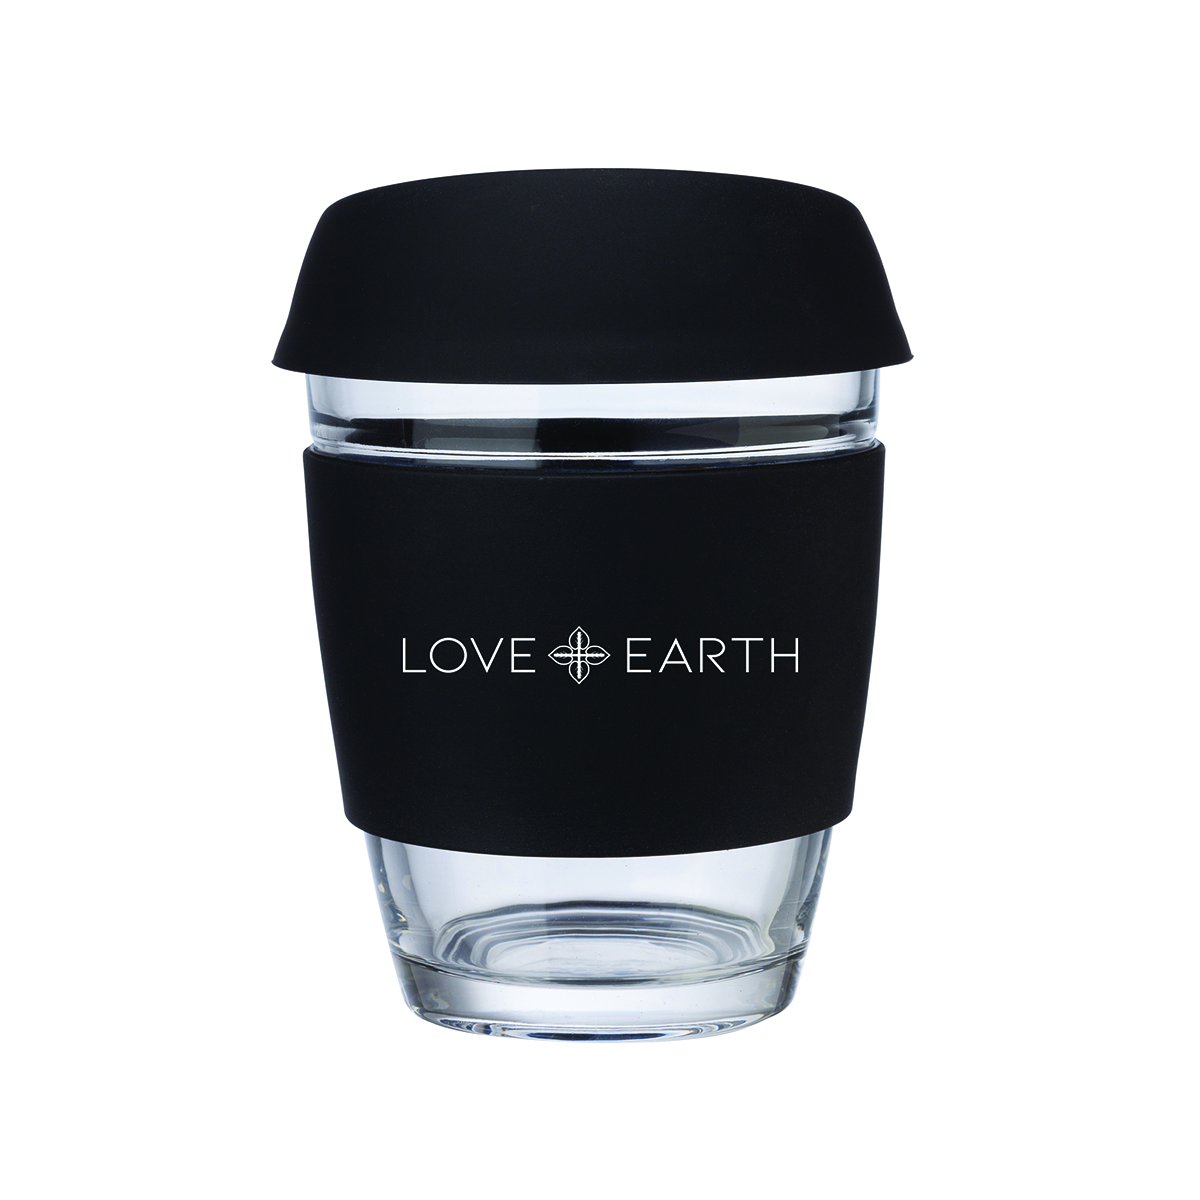 LOVE+EARTH 12oz. GLASS COFFEE MUG WITH SILICONE GRIP 